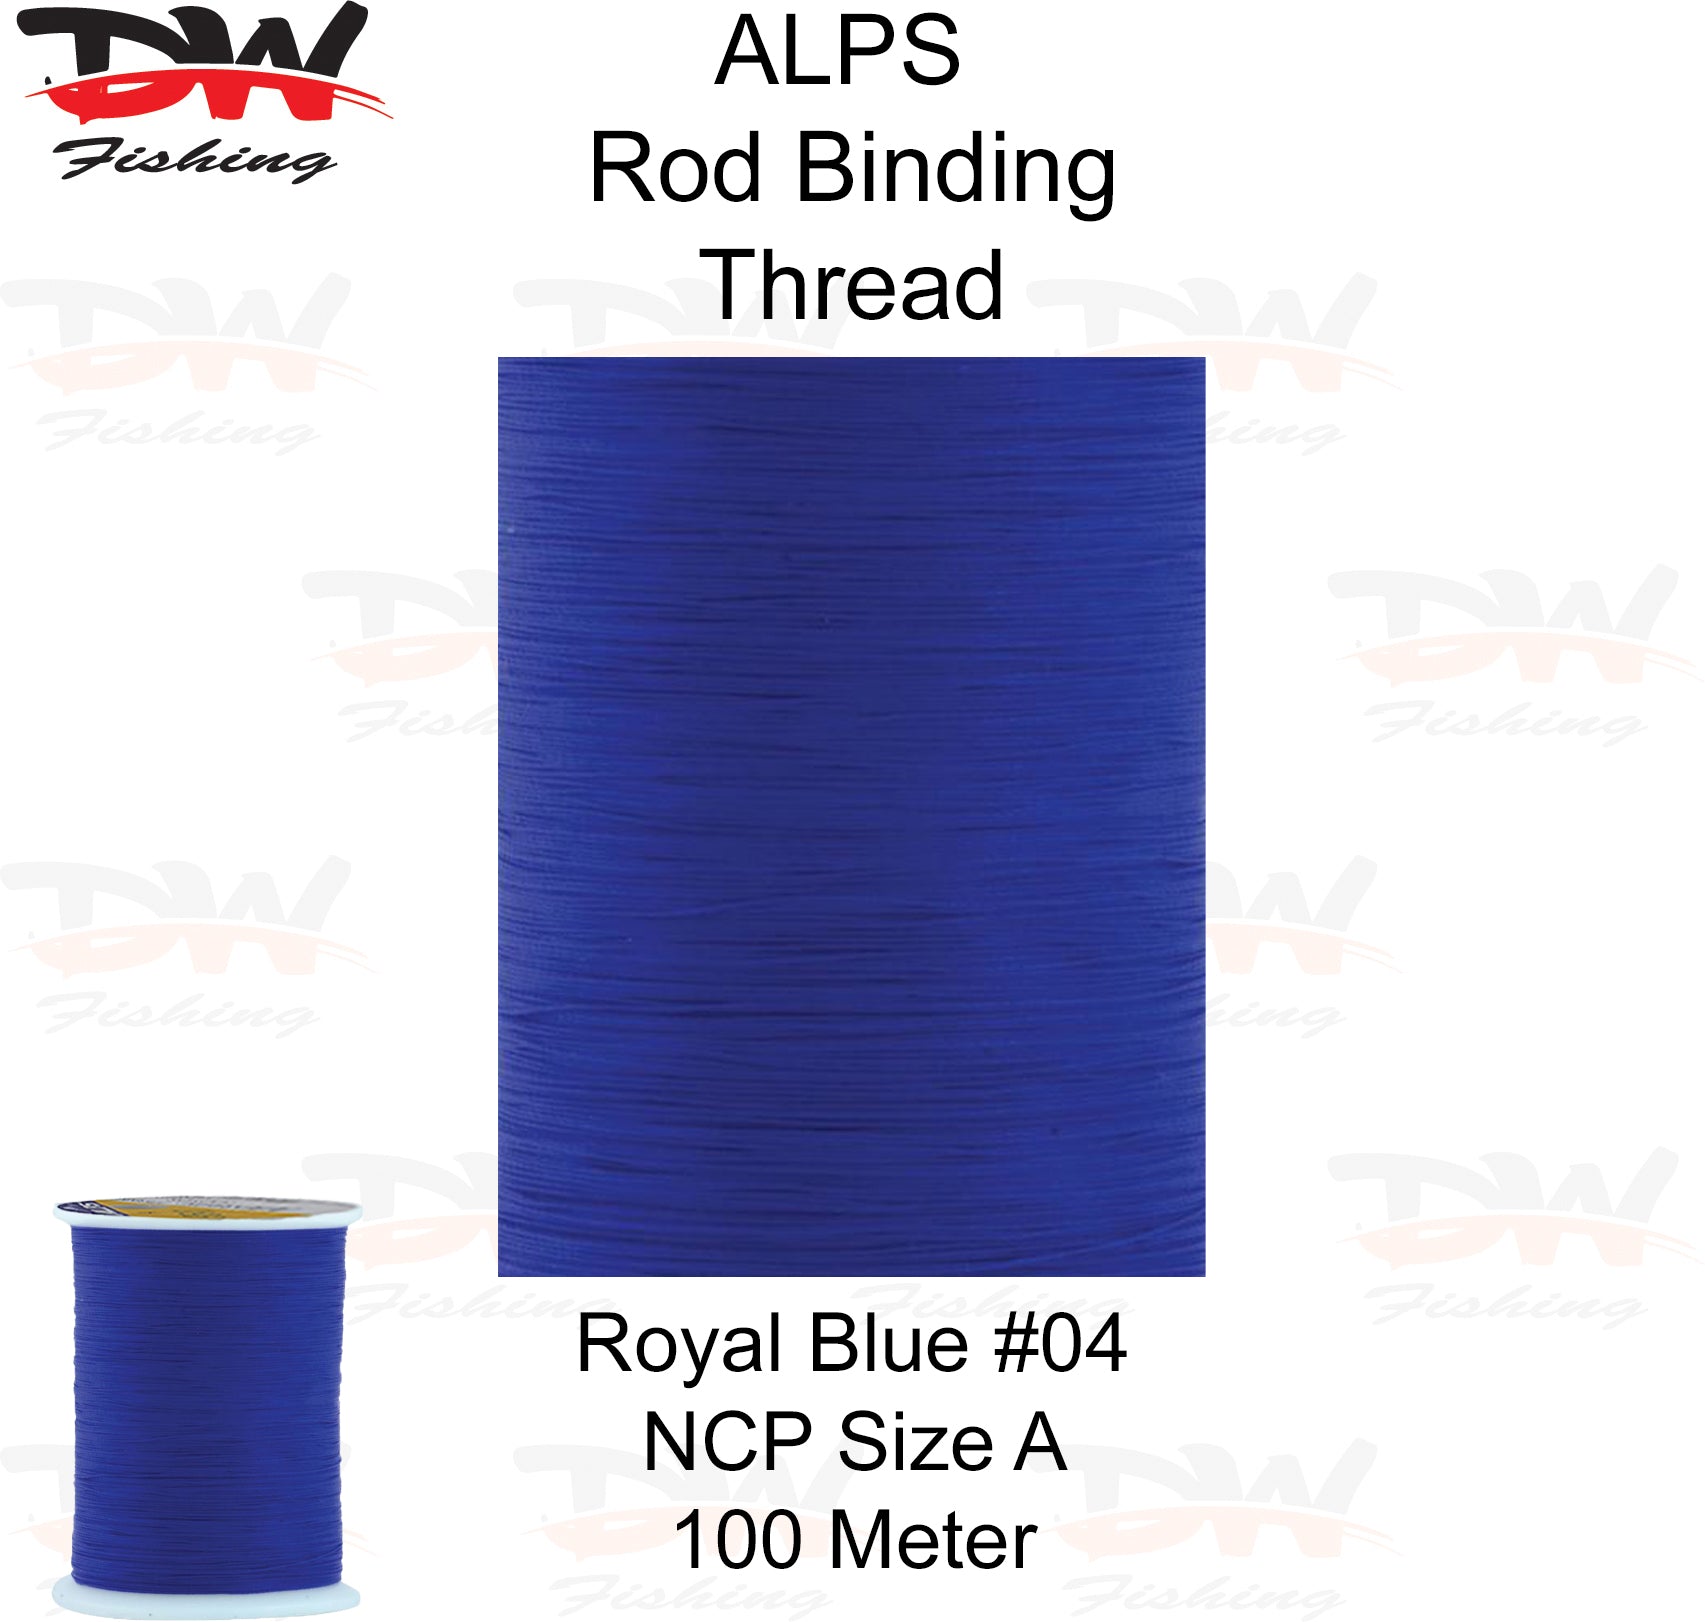 ALPS nylon rod binding thread royal blue